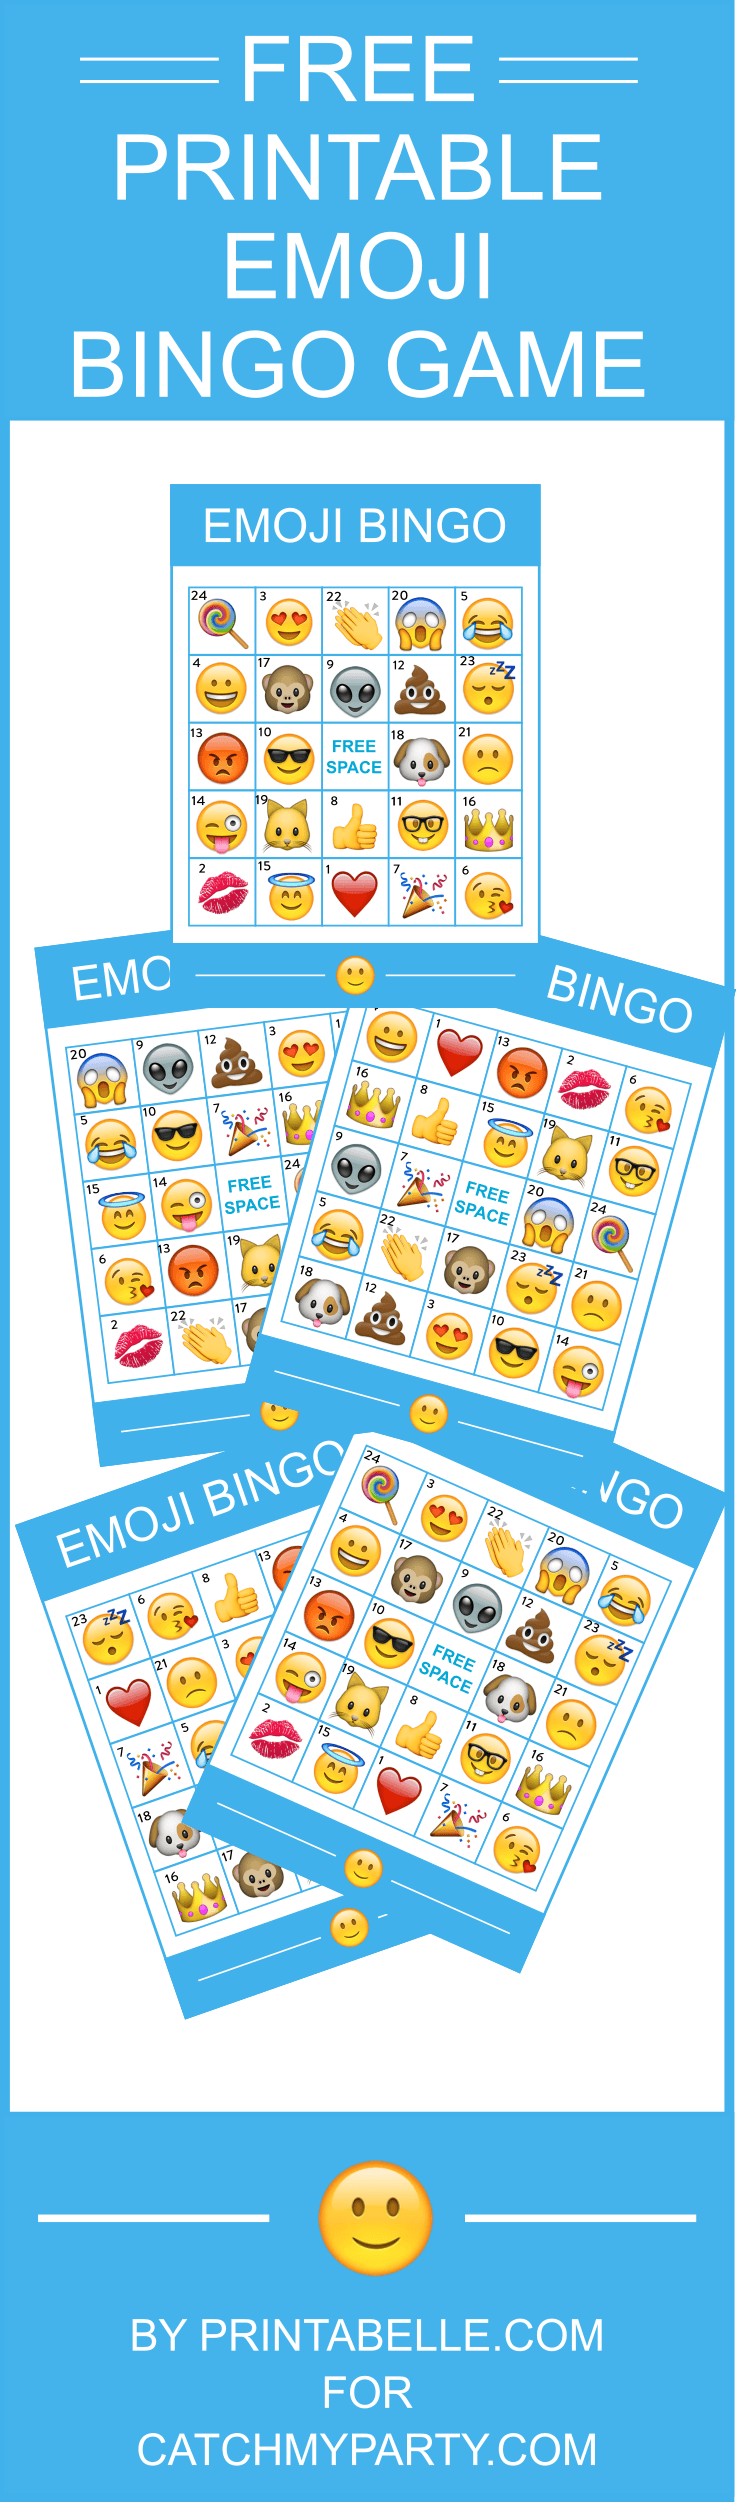 Download This Free Fantastic Printable Emoji Bingo Game 